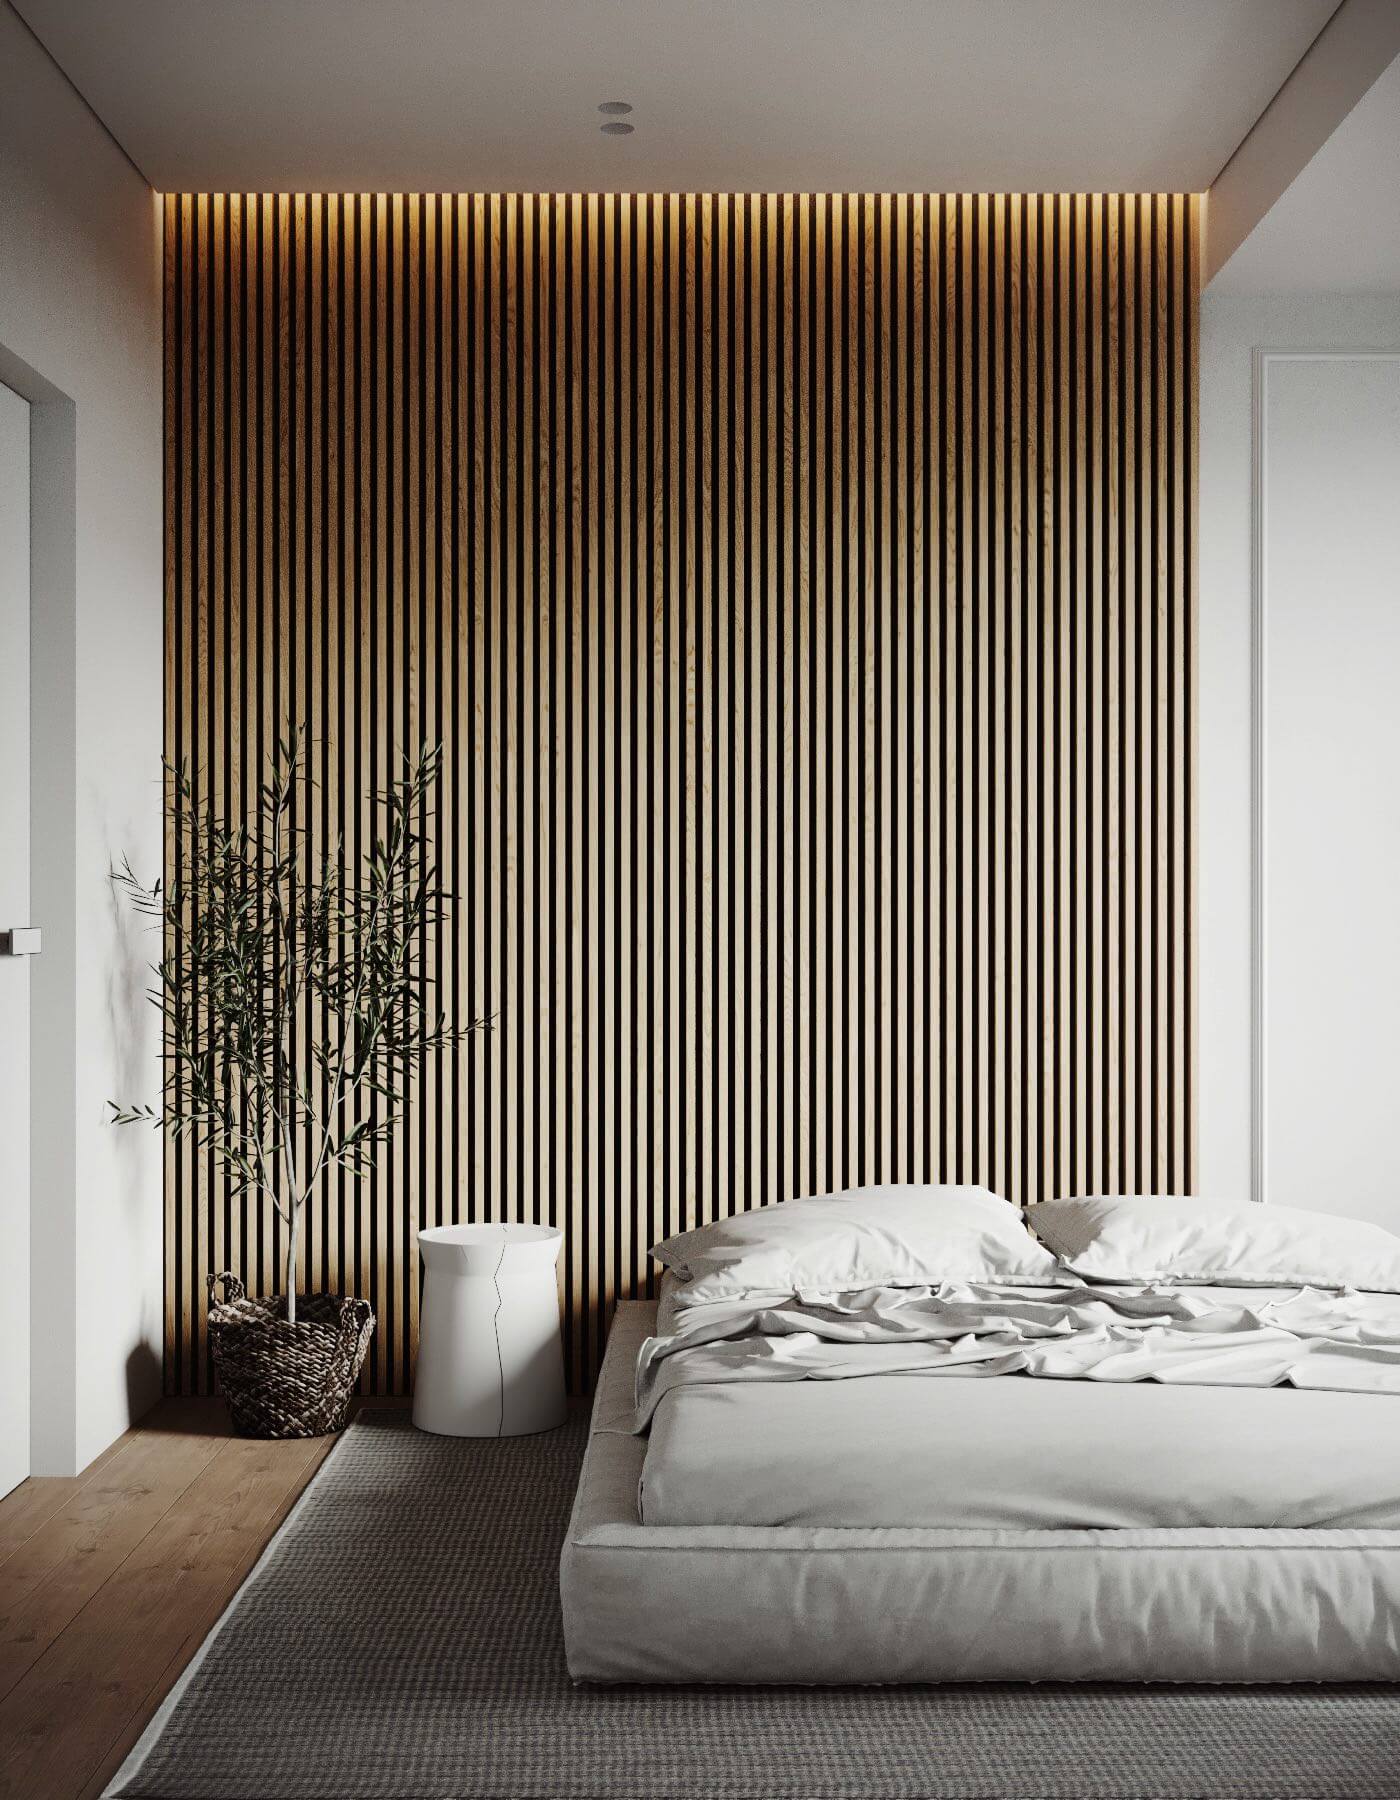 White designer loft entrance bedroom wood wall - cgi visualization